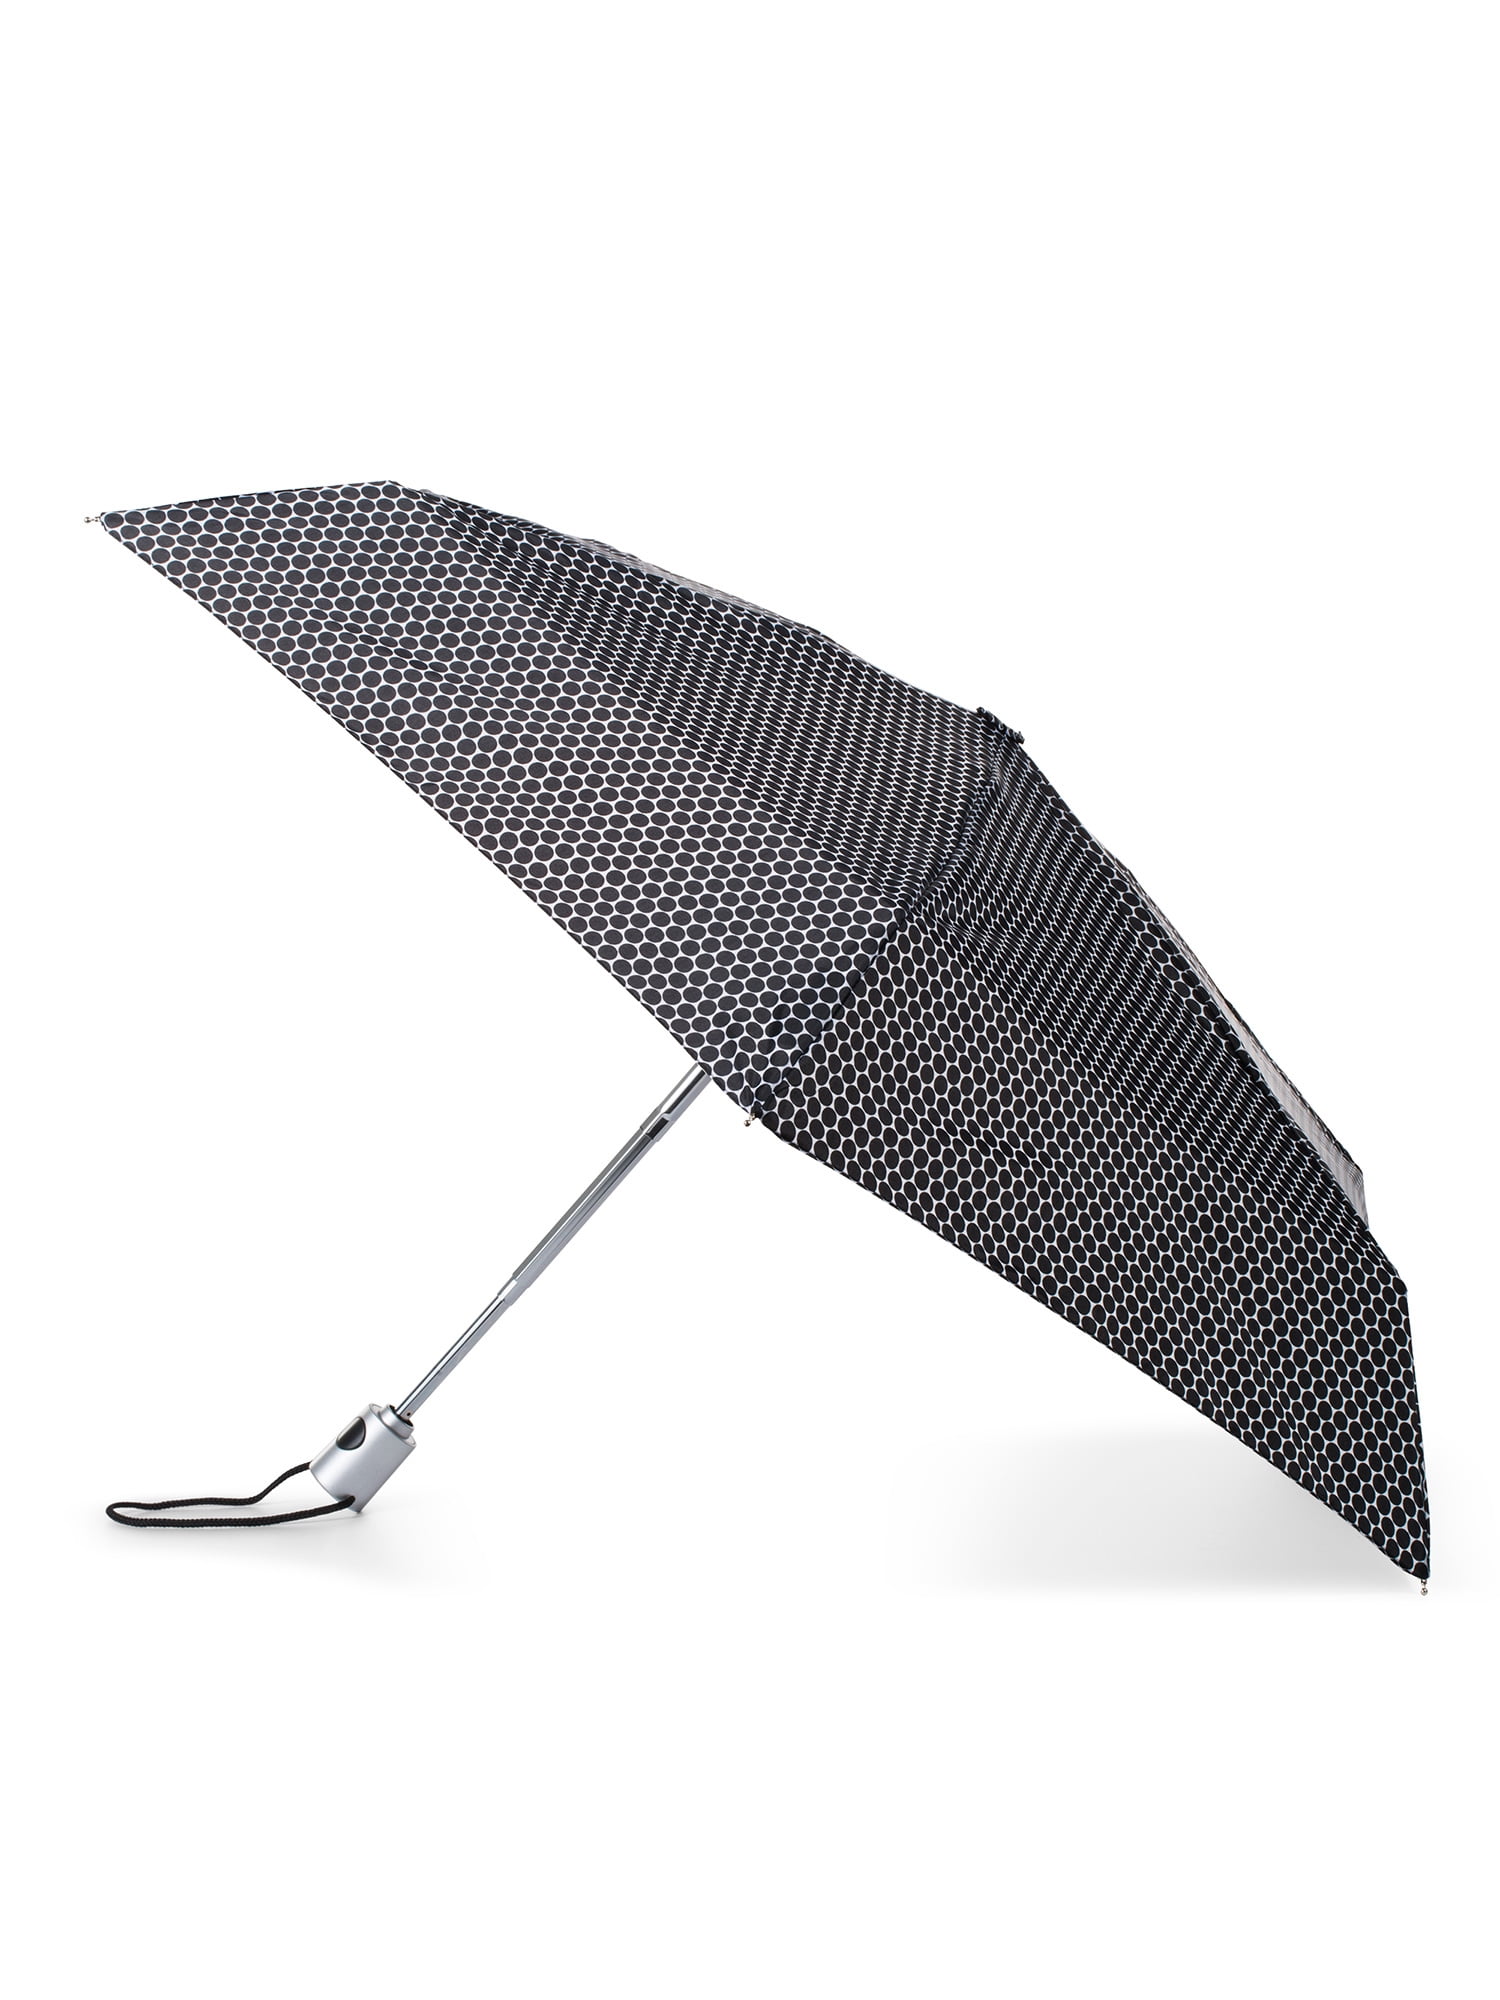 Totes Rain and Sun Auto Open Umbrella With Large 42 Inch Coverage Area Dots 